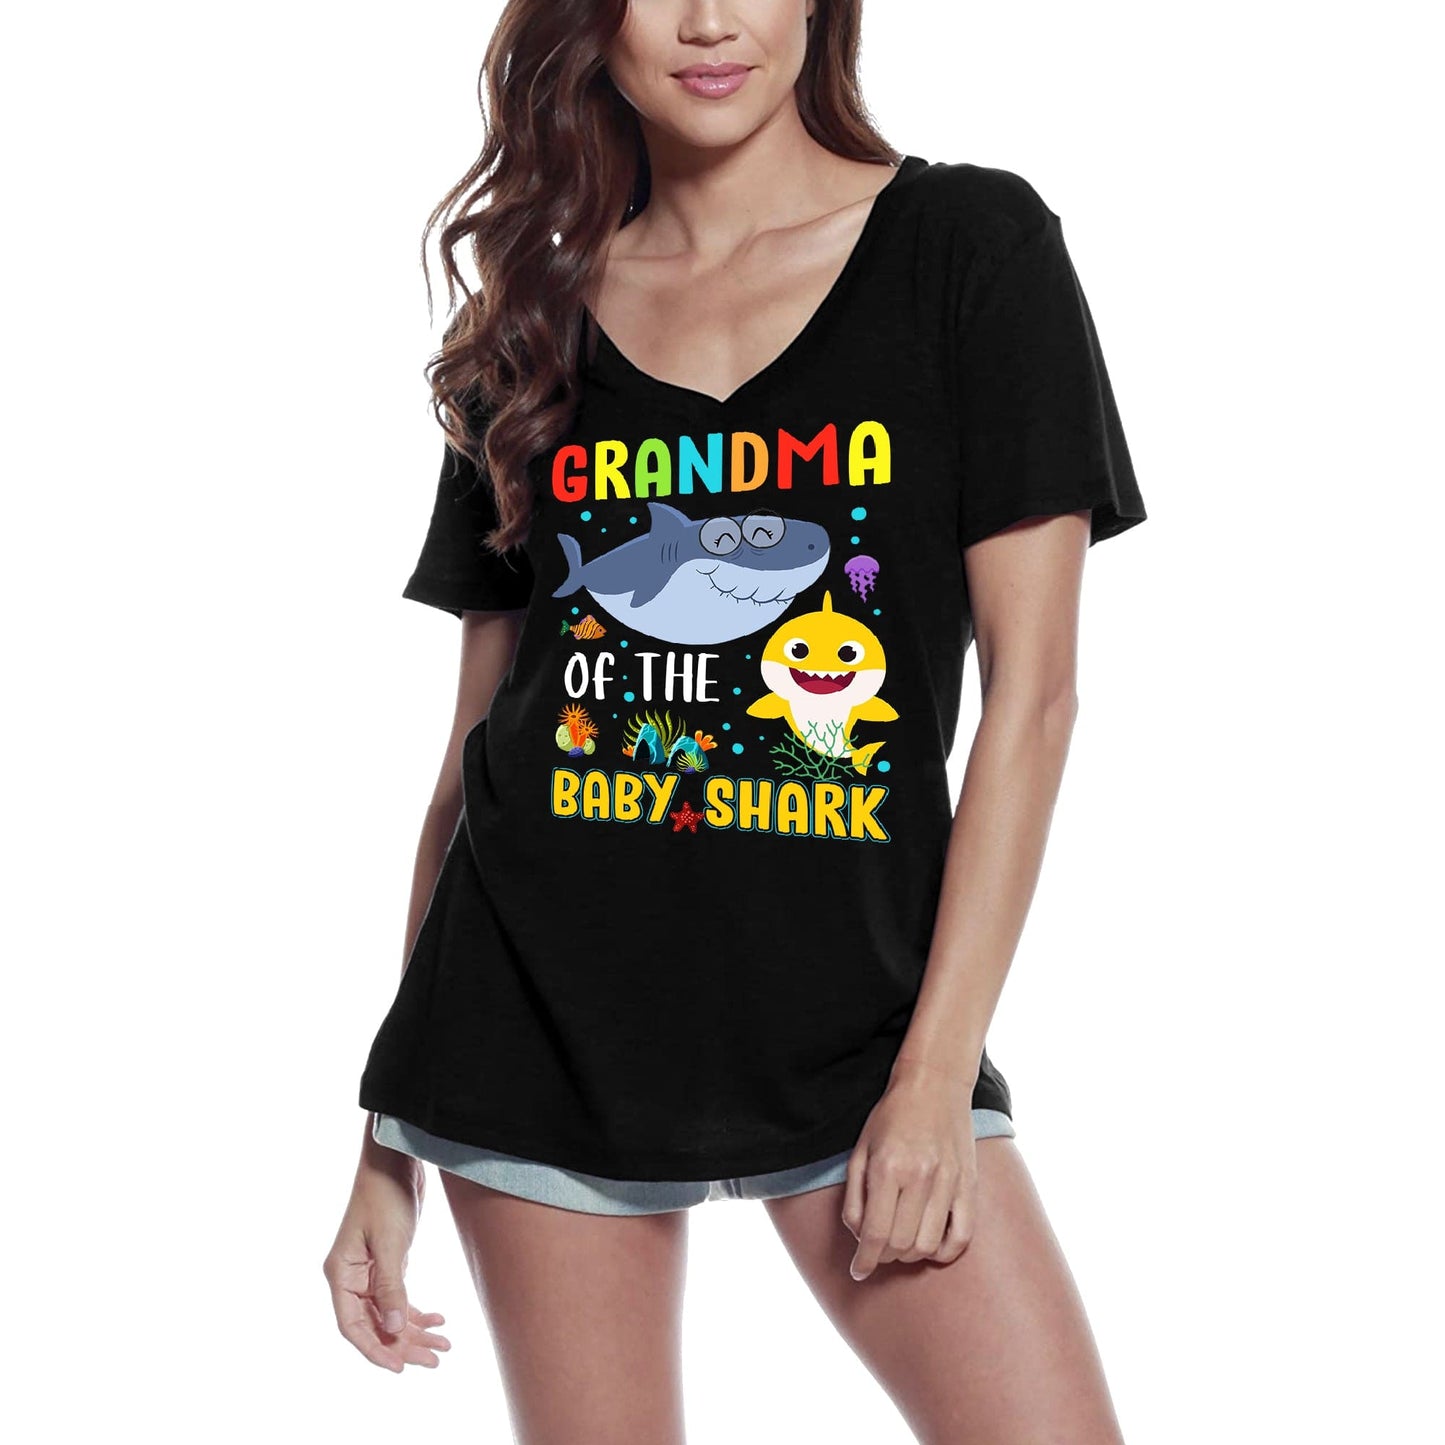 ULTRABASIC Women's T-Shirt Grandma of the Baby Shark - Funny Tee Shirt for Grandmother